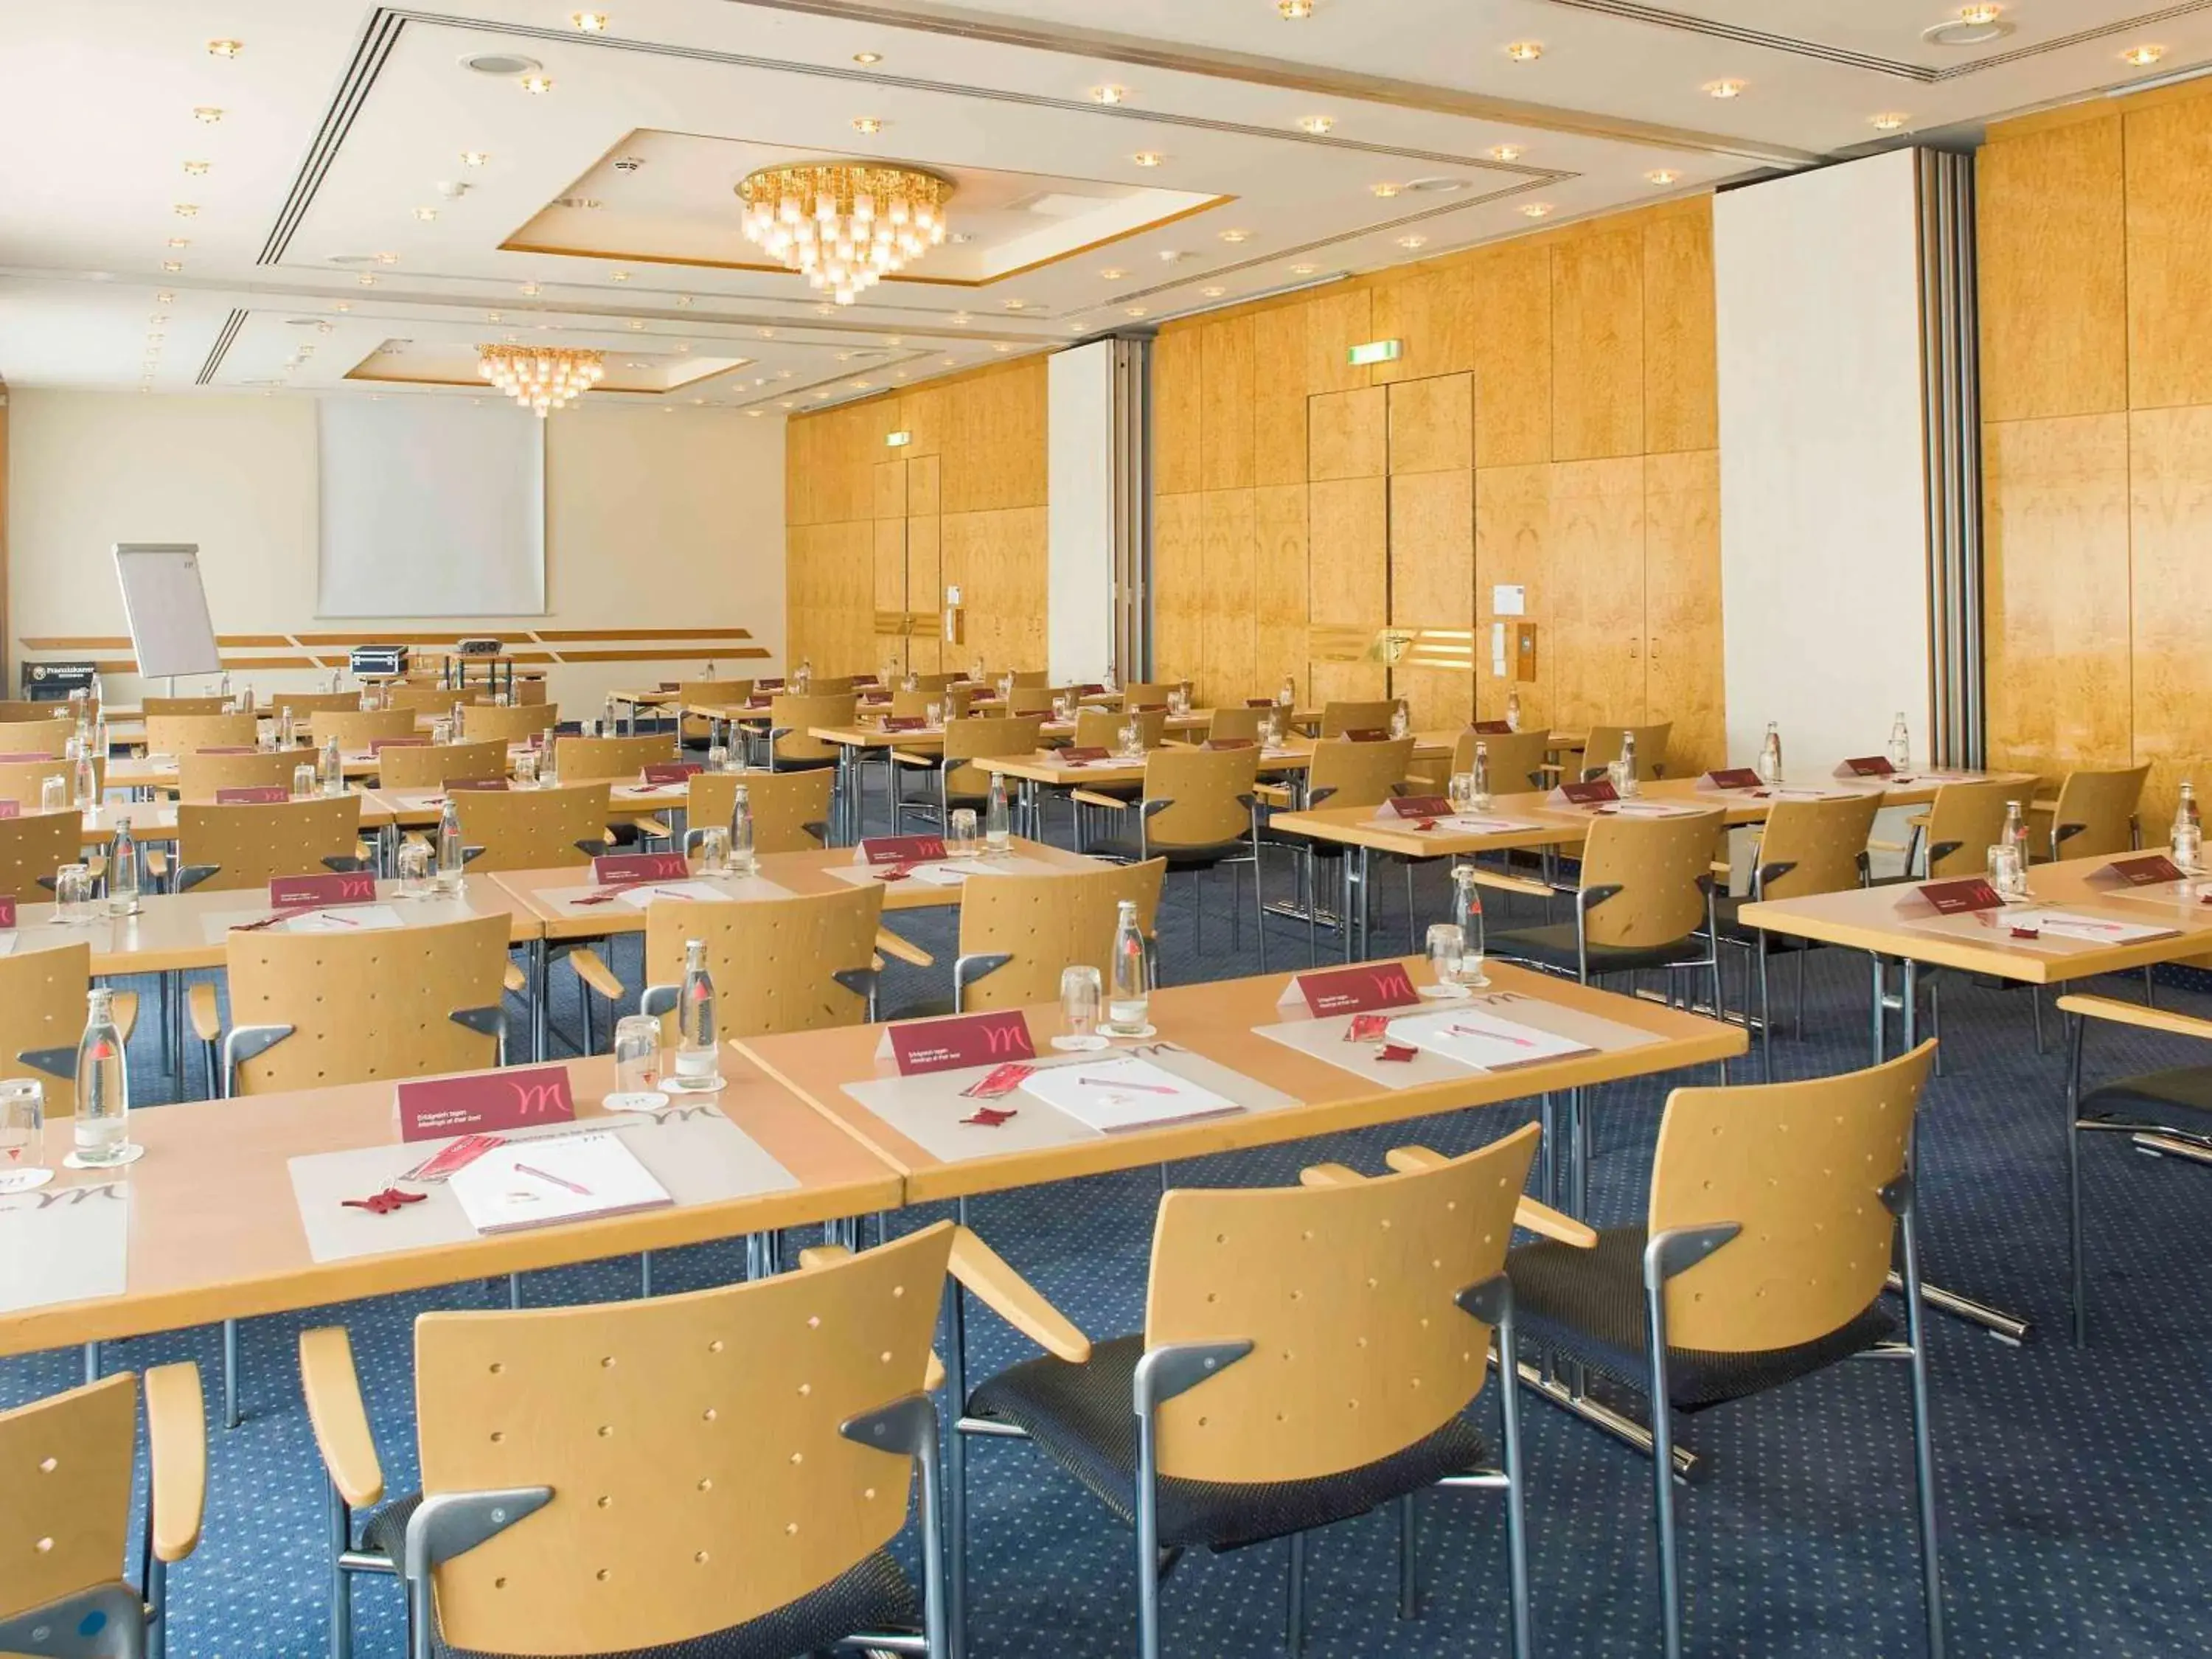 Meeting/conference room in Mercure Hotel Bad Homburg Friedrichsdorf